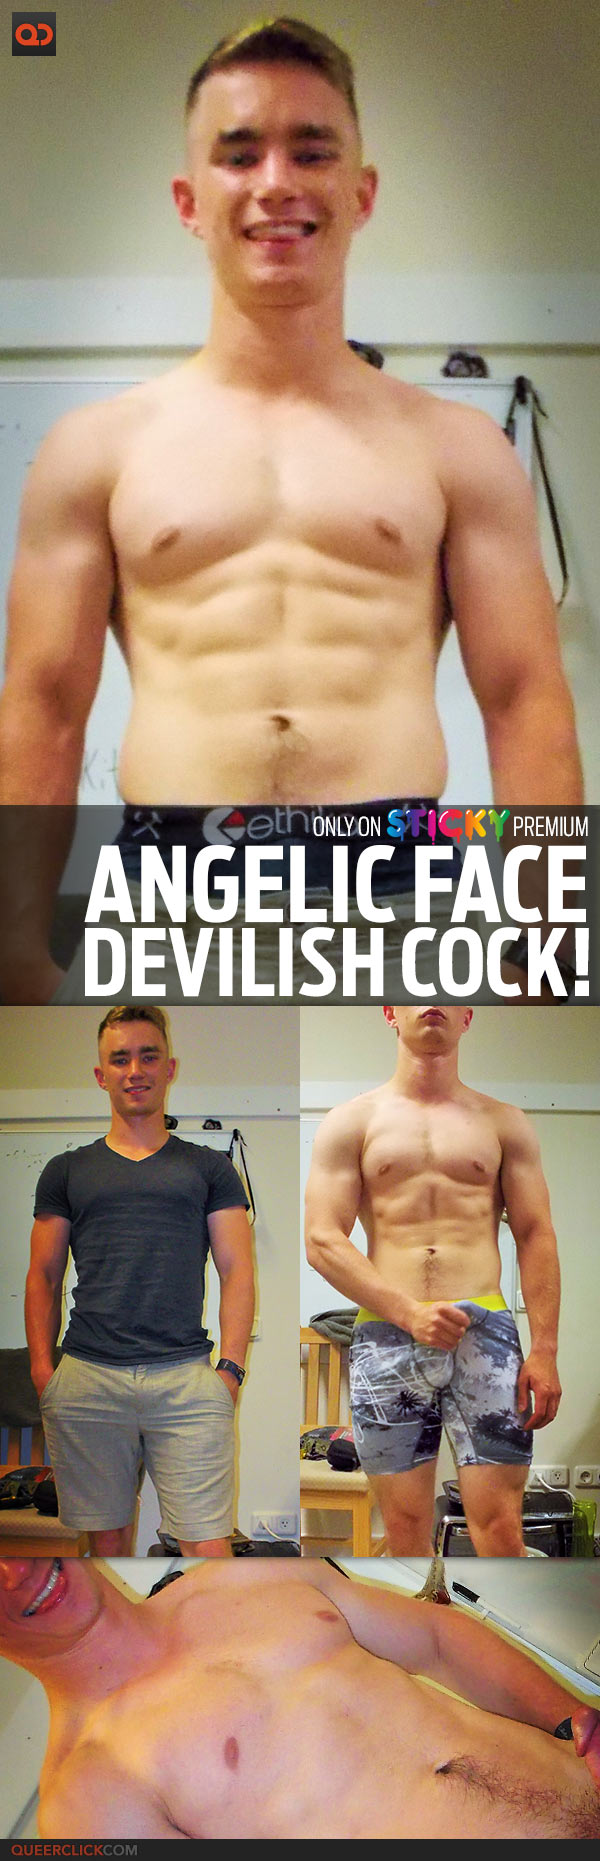 qc-sticky-angelic_face_devilish_cock-teaser